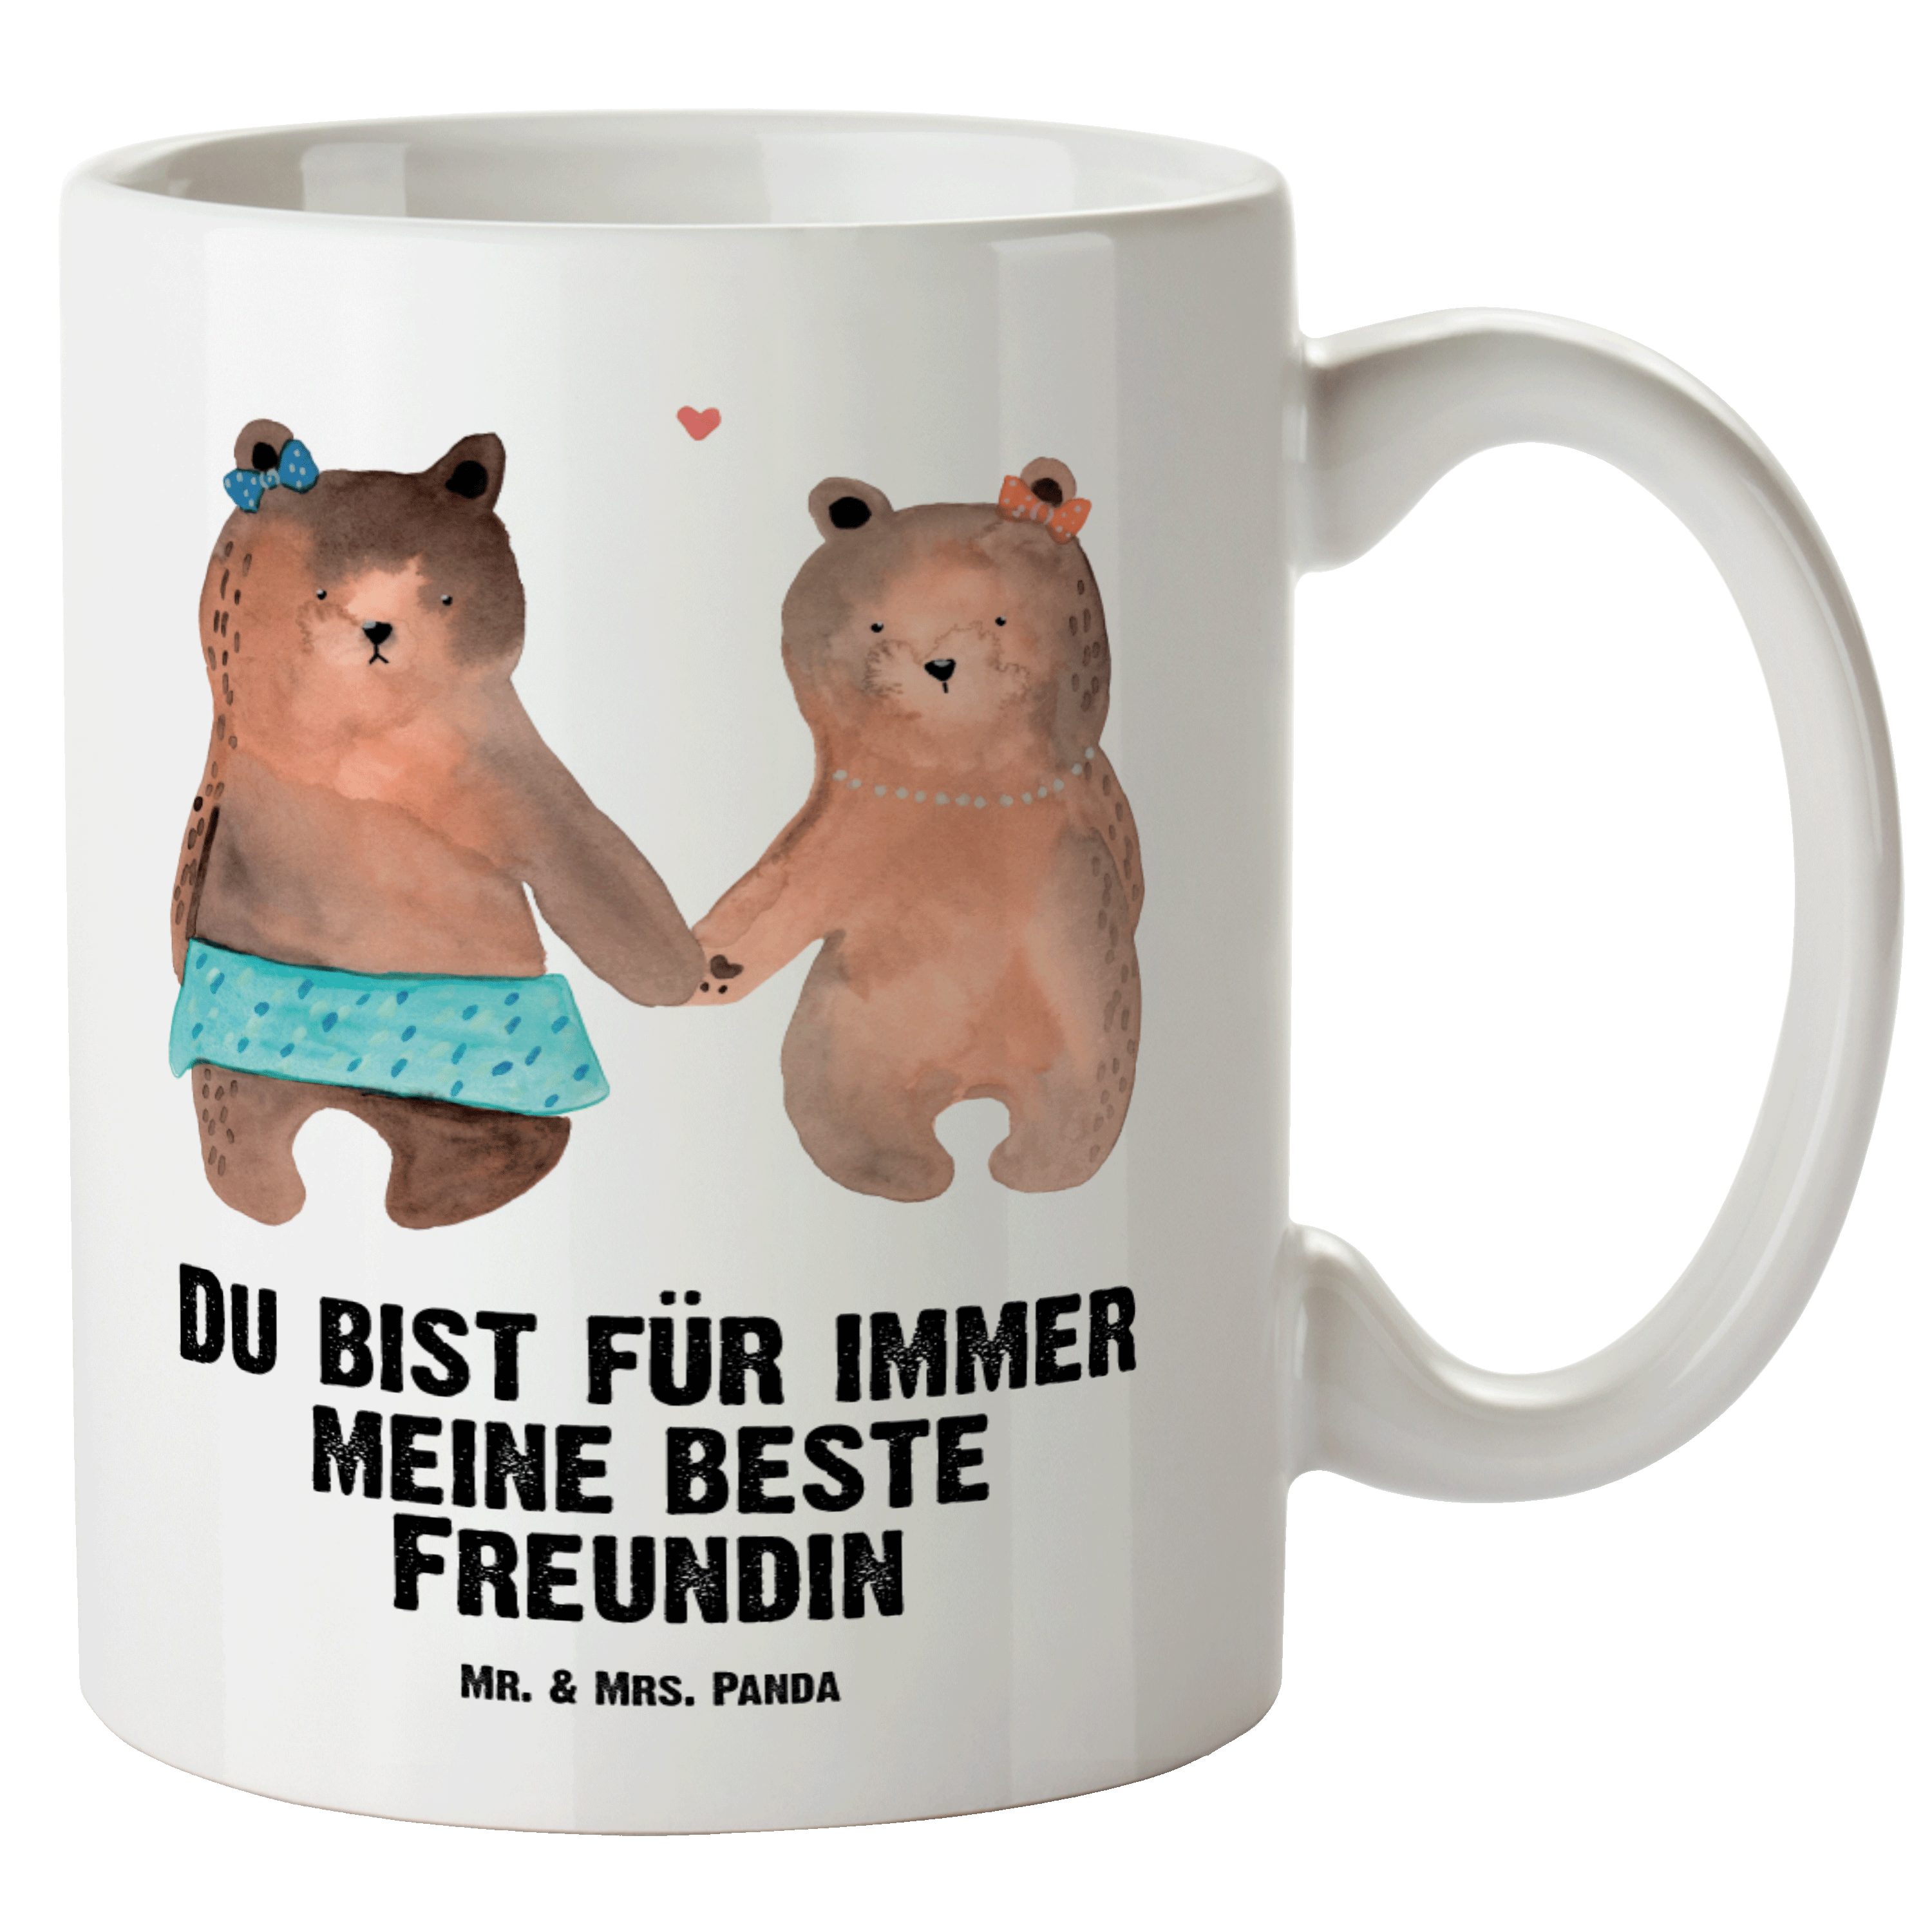 Mr. & Mrs. Panda Tasse Bär Freundin - Weiß - Geschenk, Teddybär, Grosse Kaffeetasse, spülmas, XL Tasse Keramik